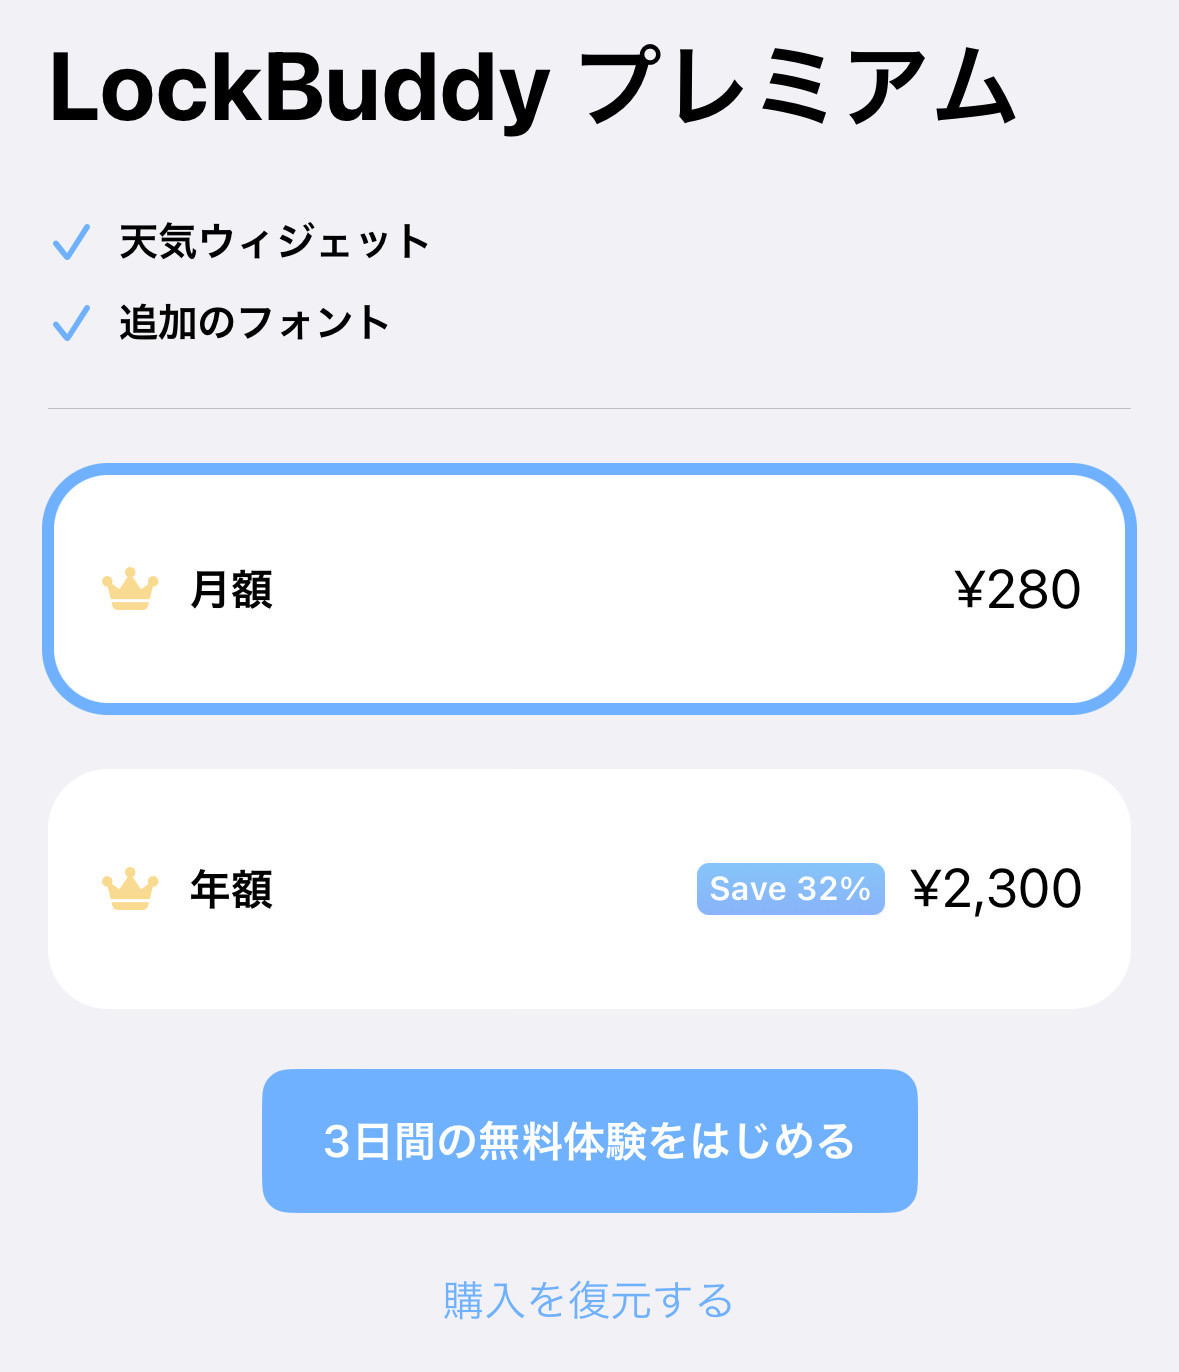 Lock buddy 28002